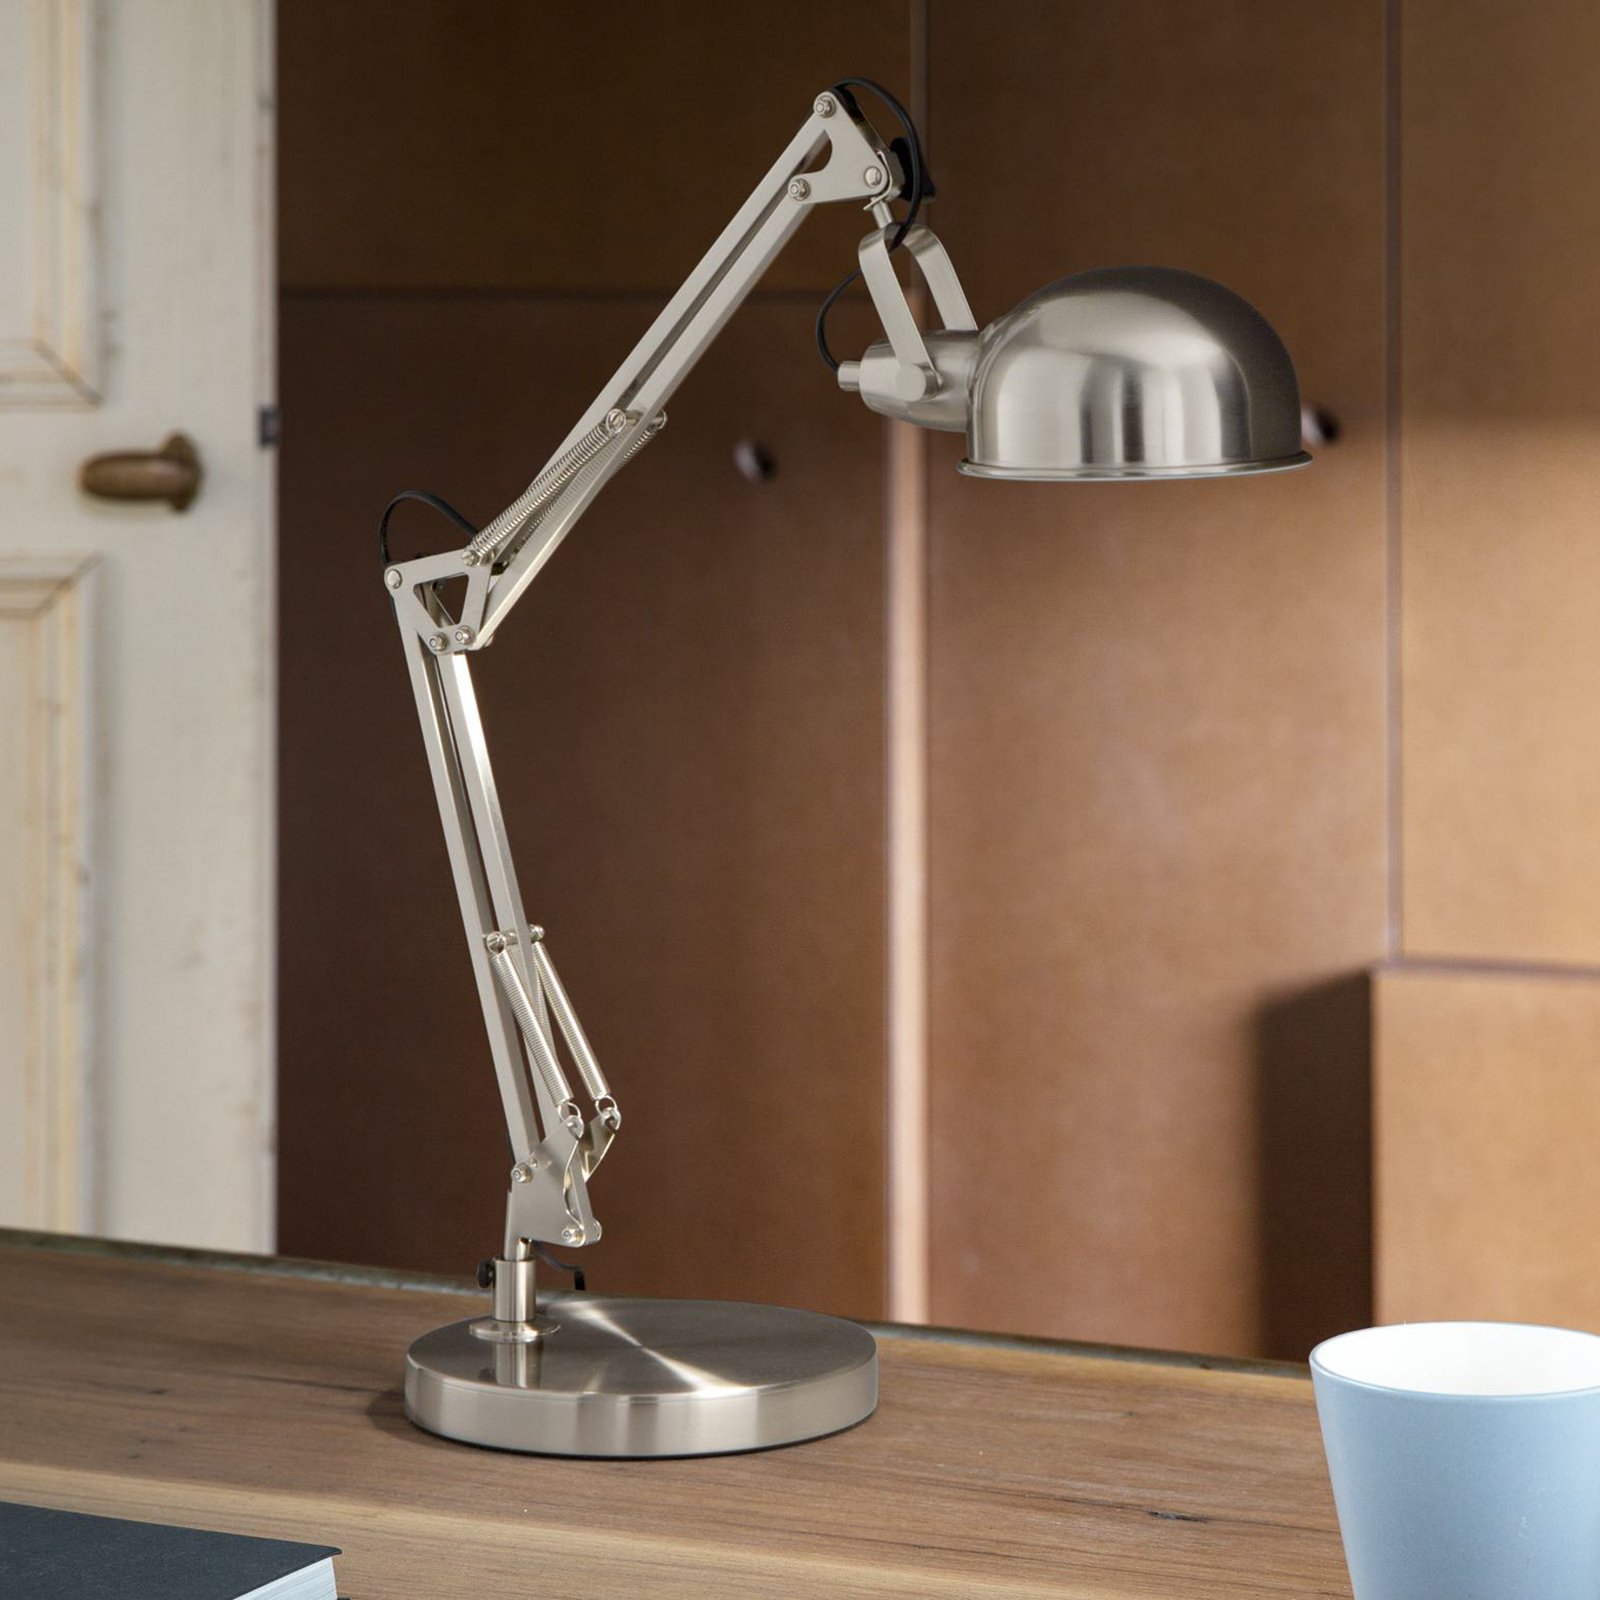 Ideal Lux lampe de bureau Johnny, couleur nickel, métal